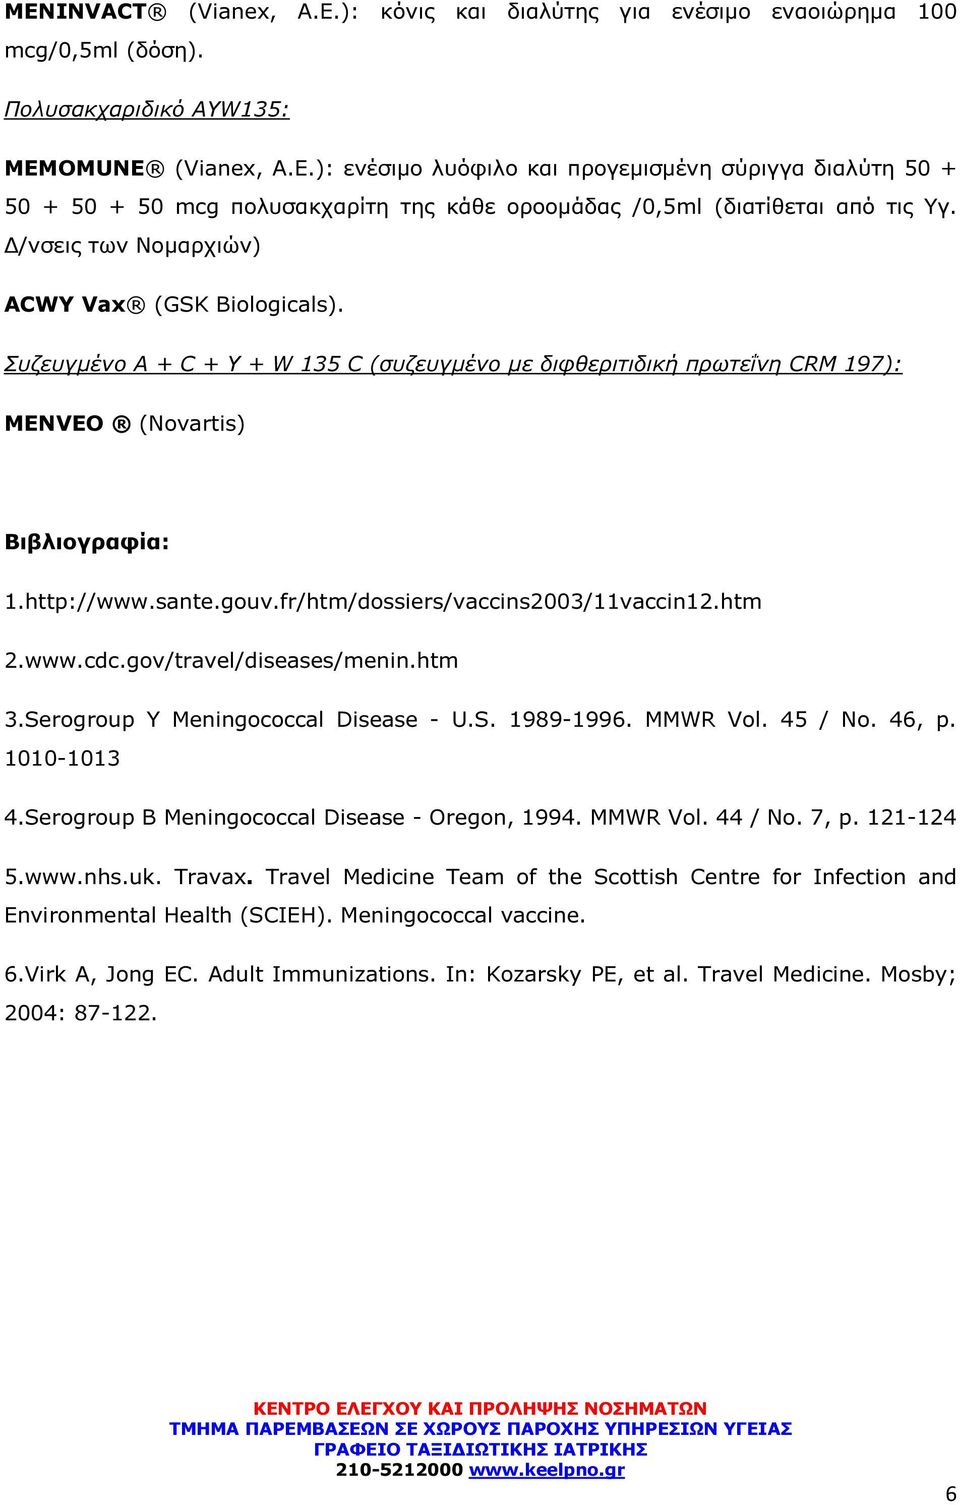 fr/htm/dossiers/vaccins2003/11vaccin12.htm 2.www.cdc.gov/travel/diseases/menin.htm 3.Serogroup Y Meningococcal Disease - U.S. 1989-1996. MMWR Vol. 45 / No. 46, p. 1010-1013 4.